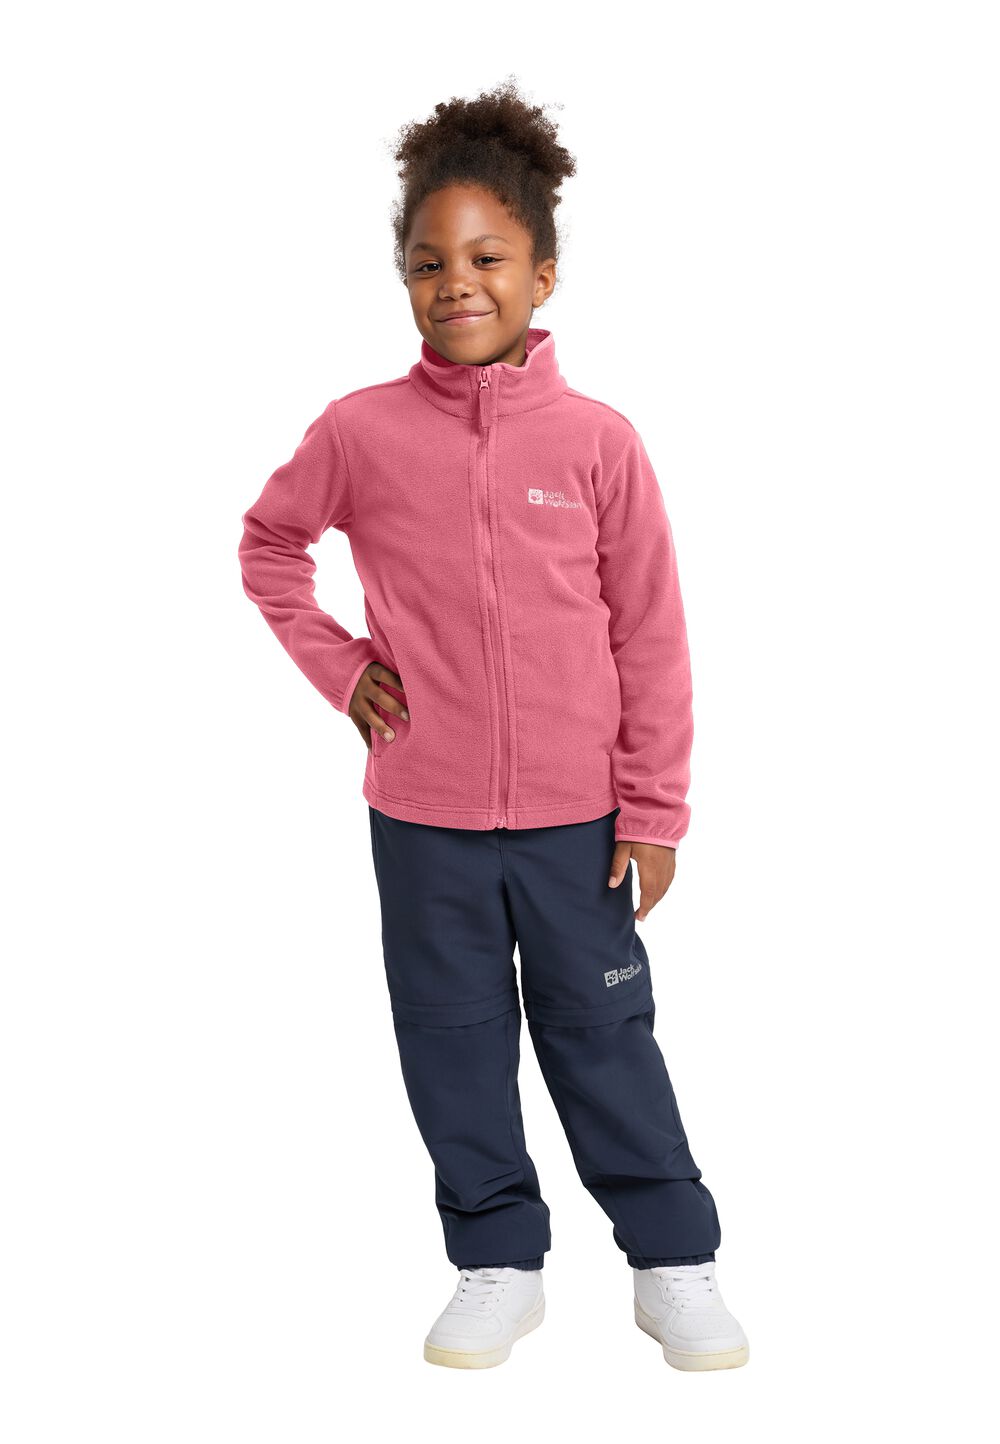 Jack Wolfskin Taunus Jacket Kids Fleece jack Kinderen 128 soft pink soft pink